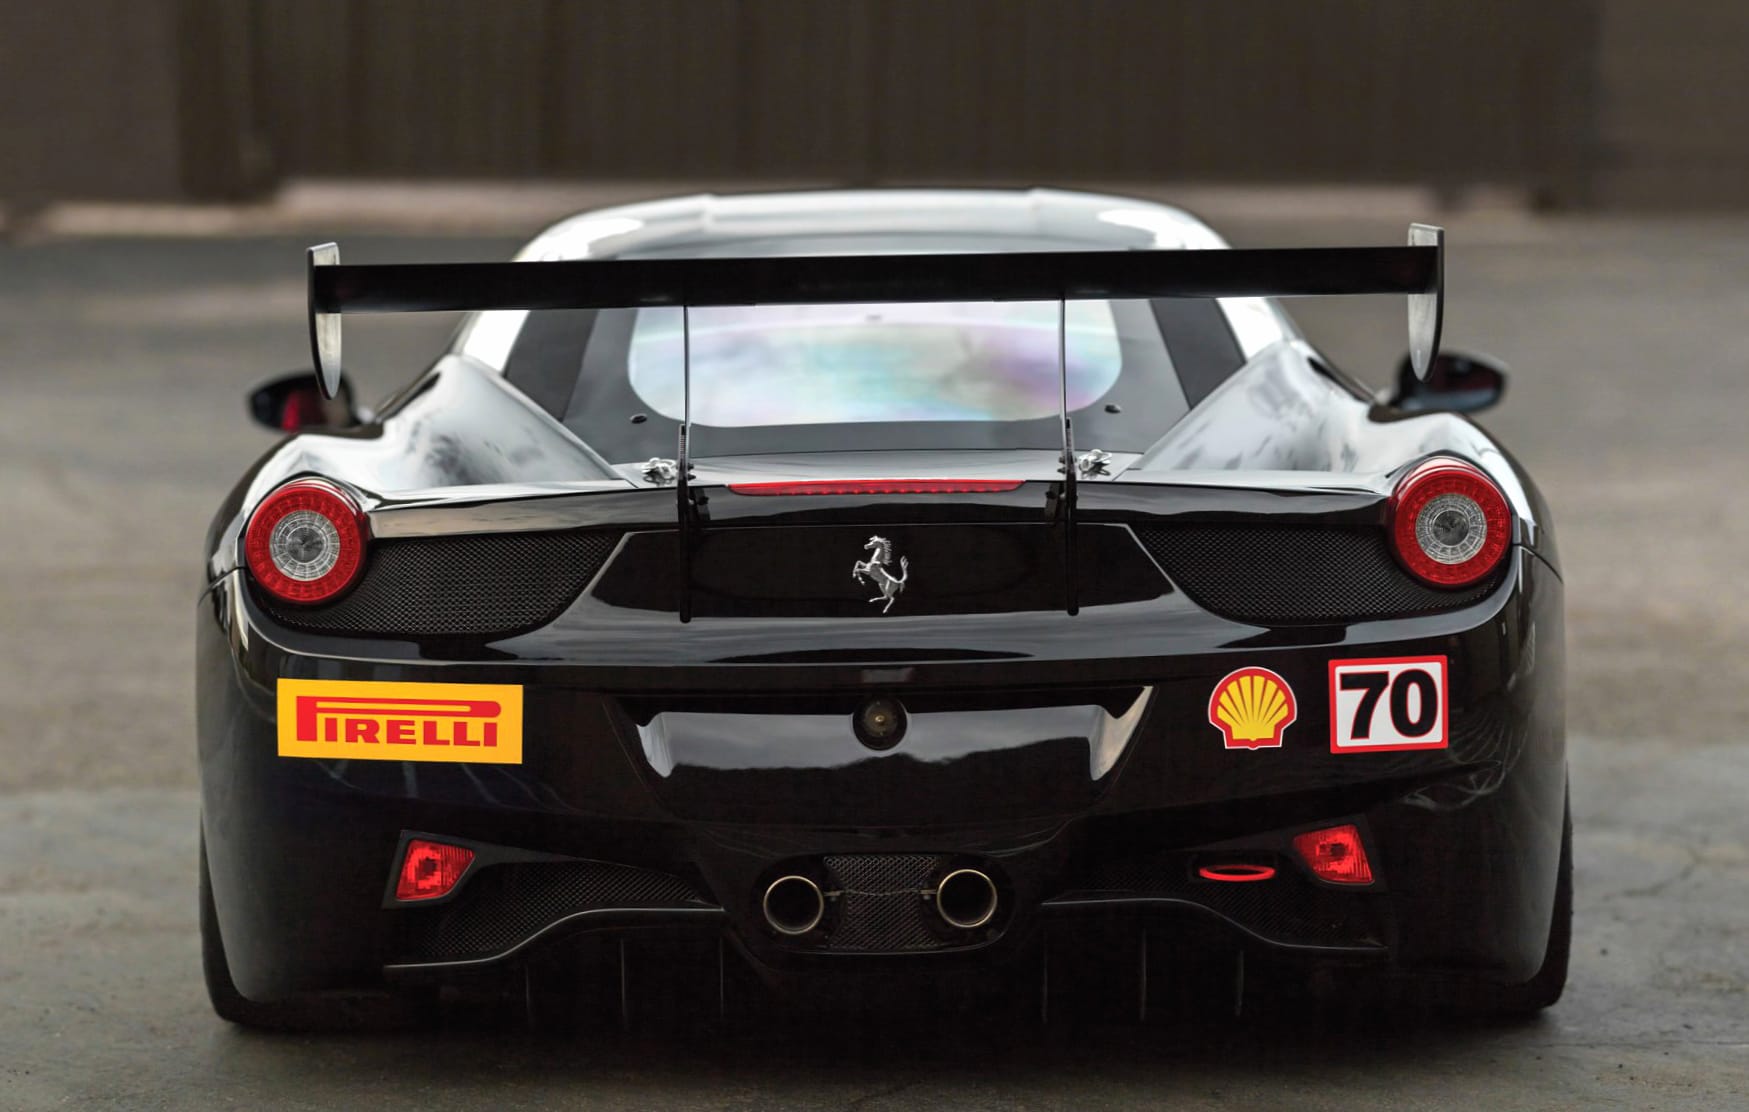 Ferrari 458 Challenge Evoluzione at 2048 x 2048 iPad size wallpapers HD quality